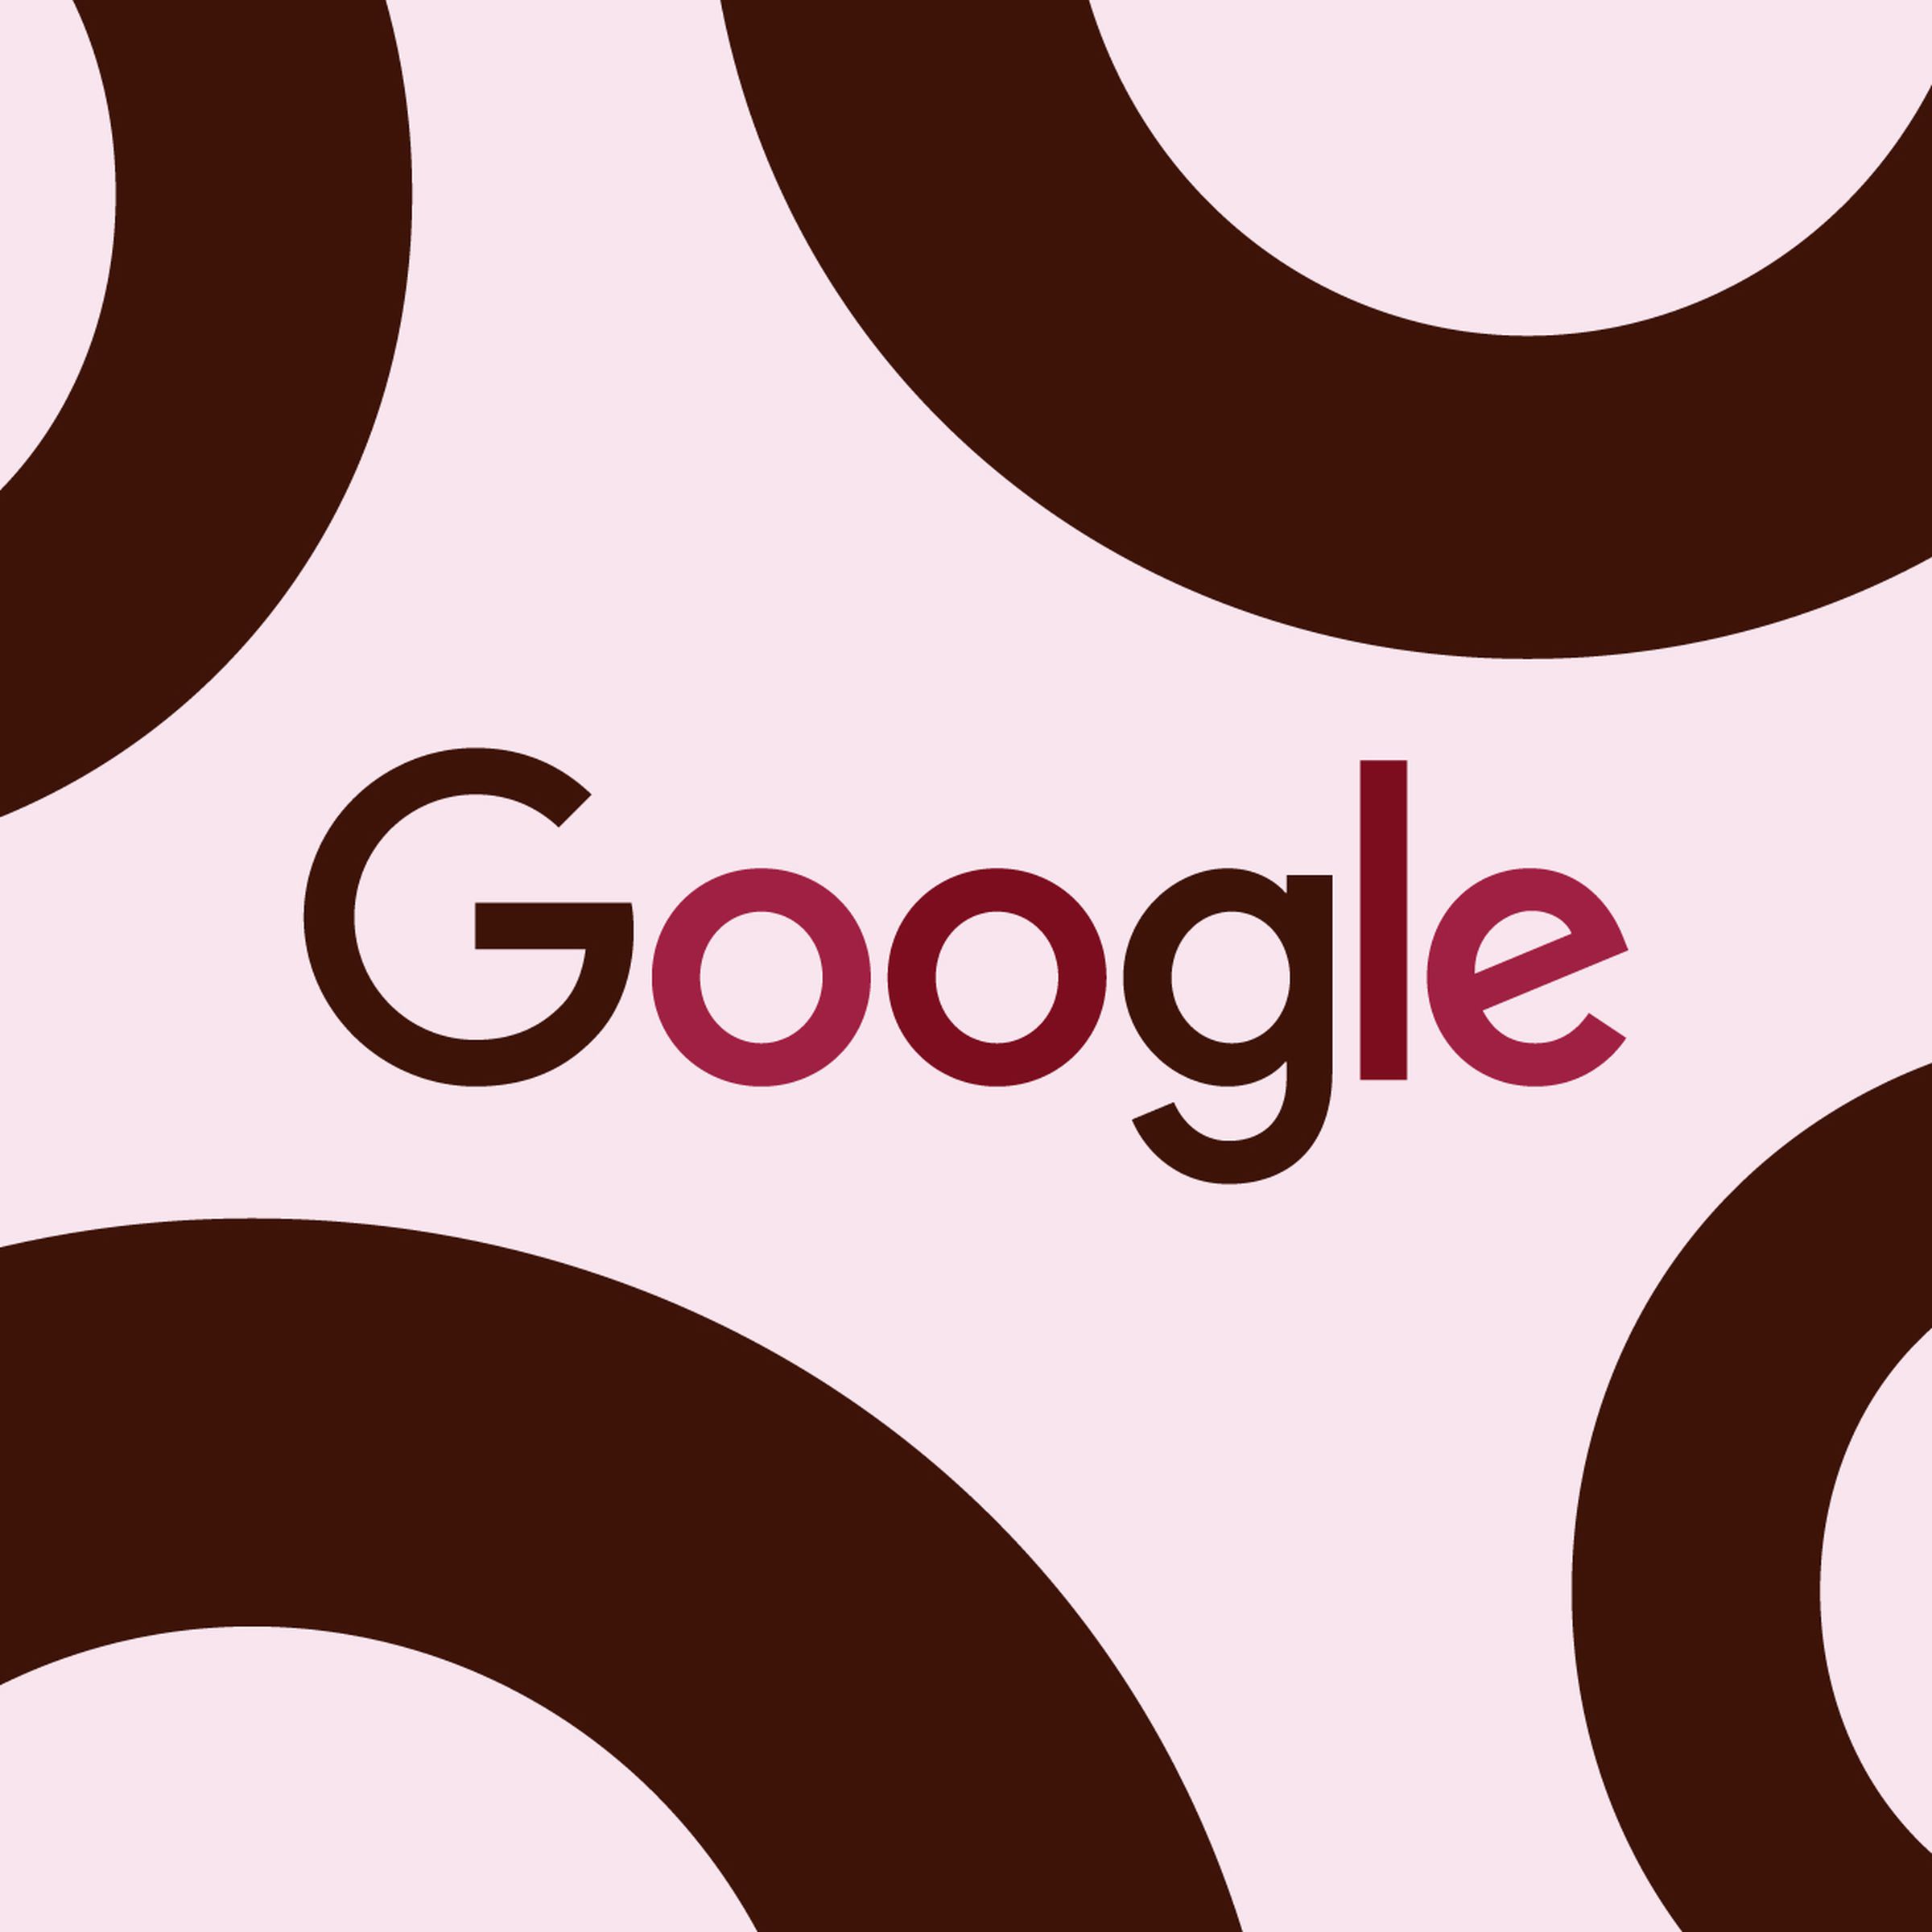 Google logo and black swirls